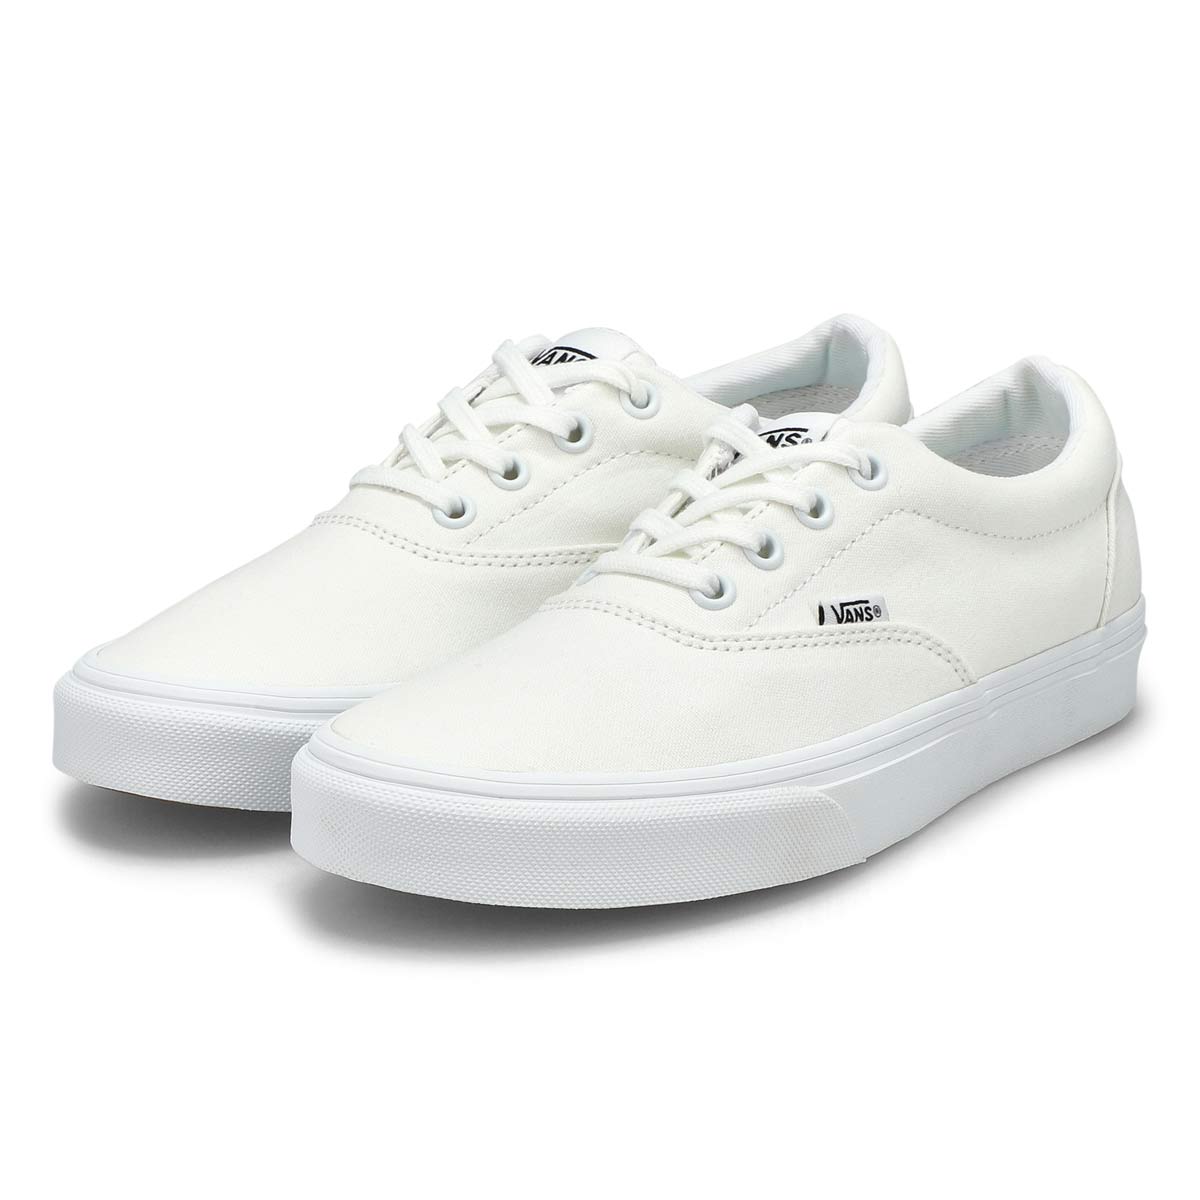 Women's Doheny Sneaker - White/ White